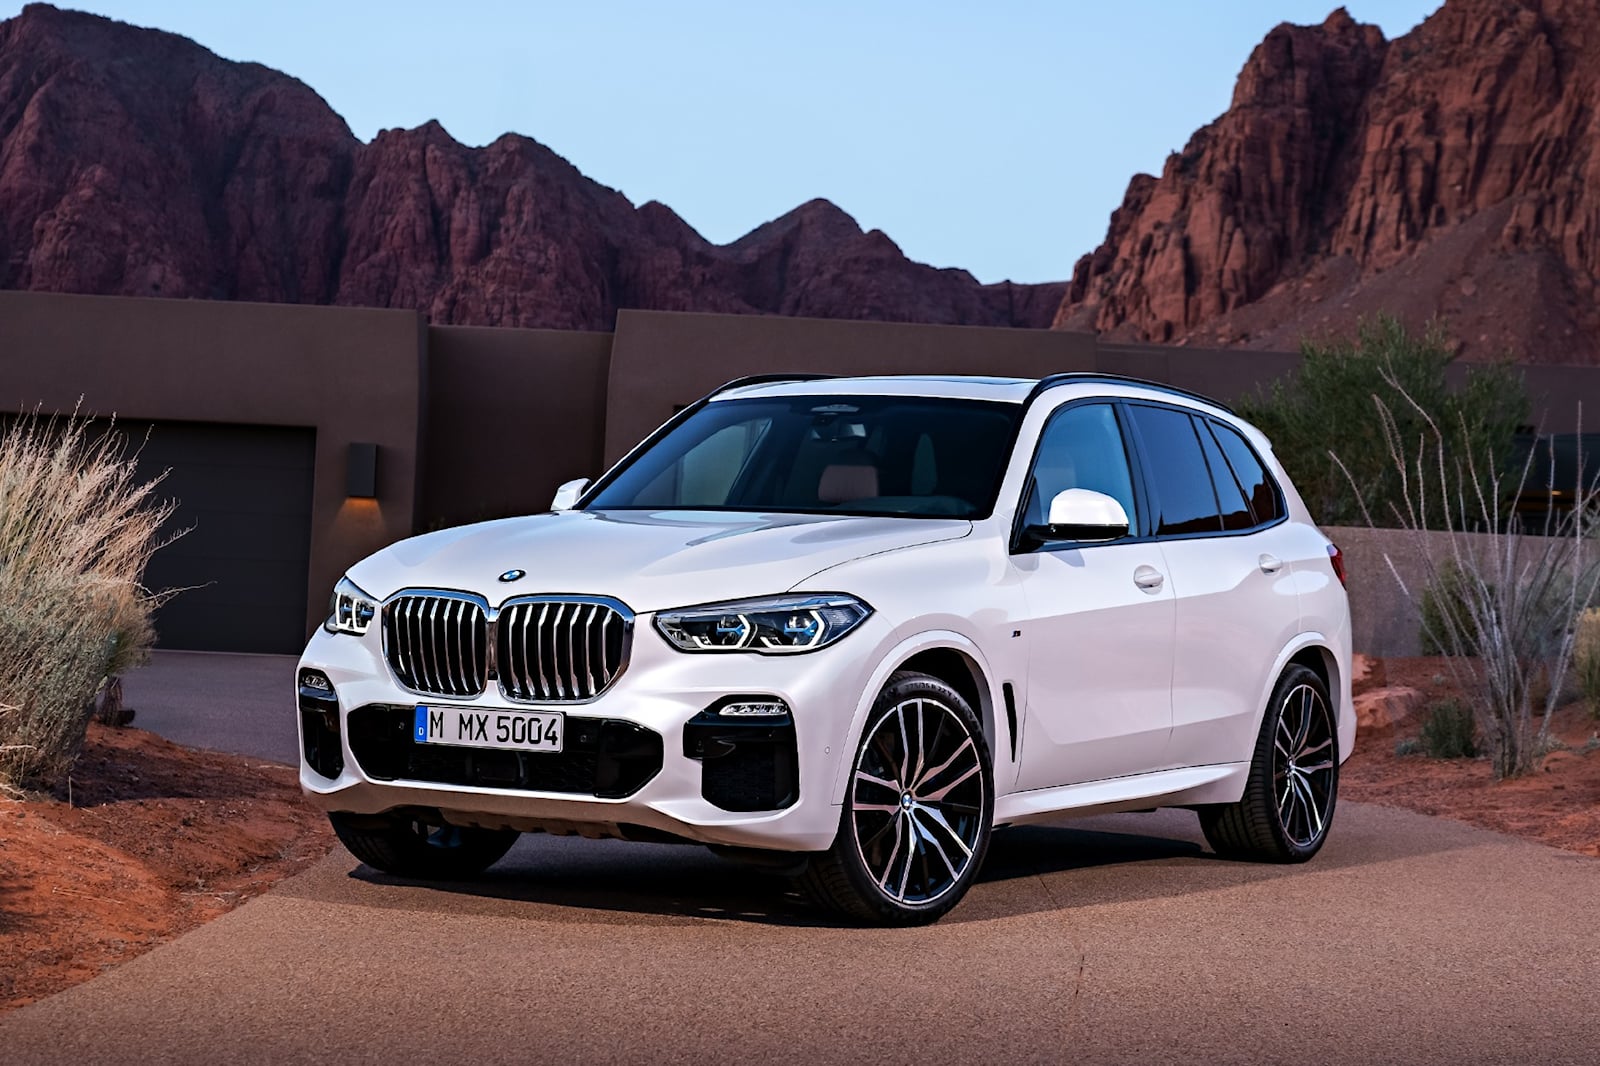 2022 BMW X5 Exterior Dimensions: Colors Options & Accessories